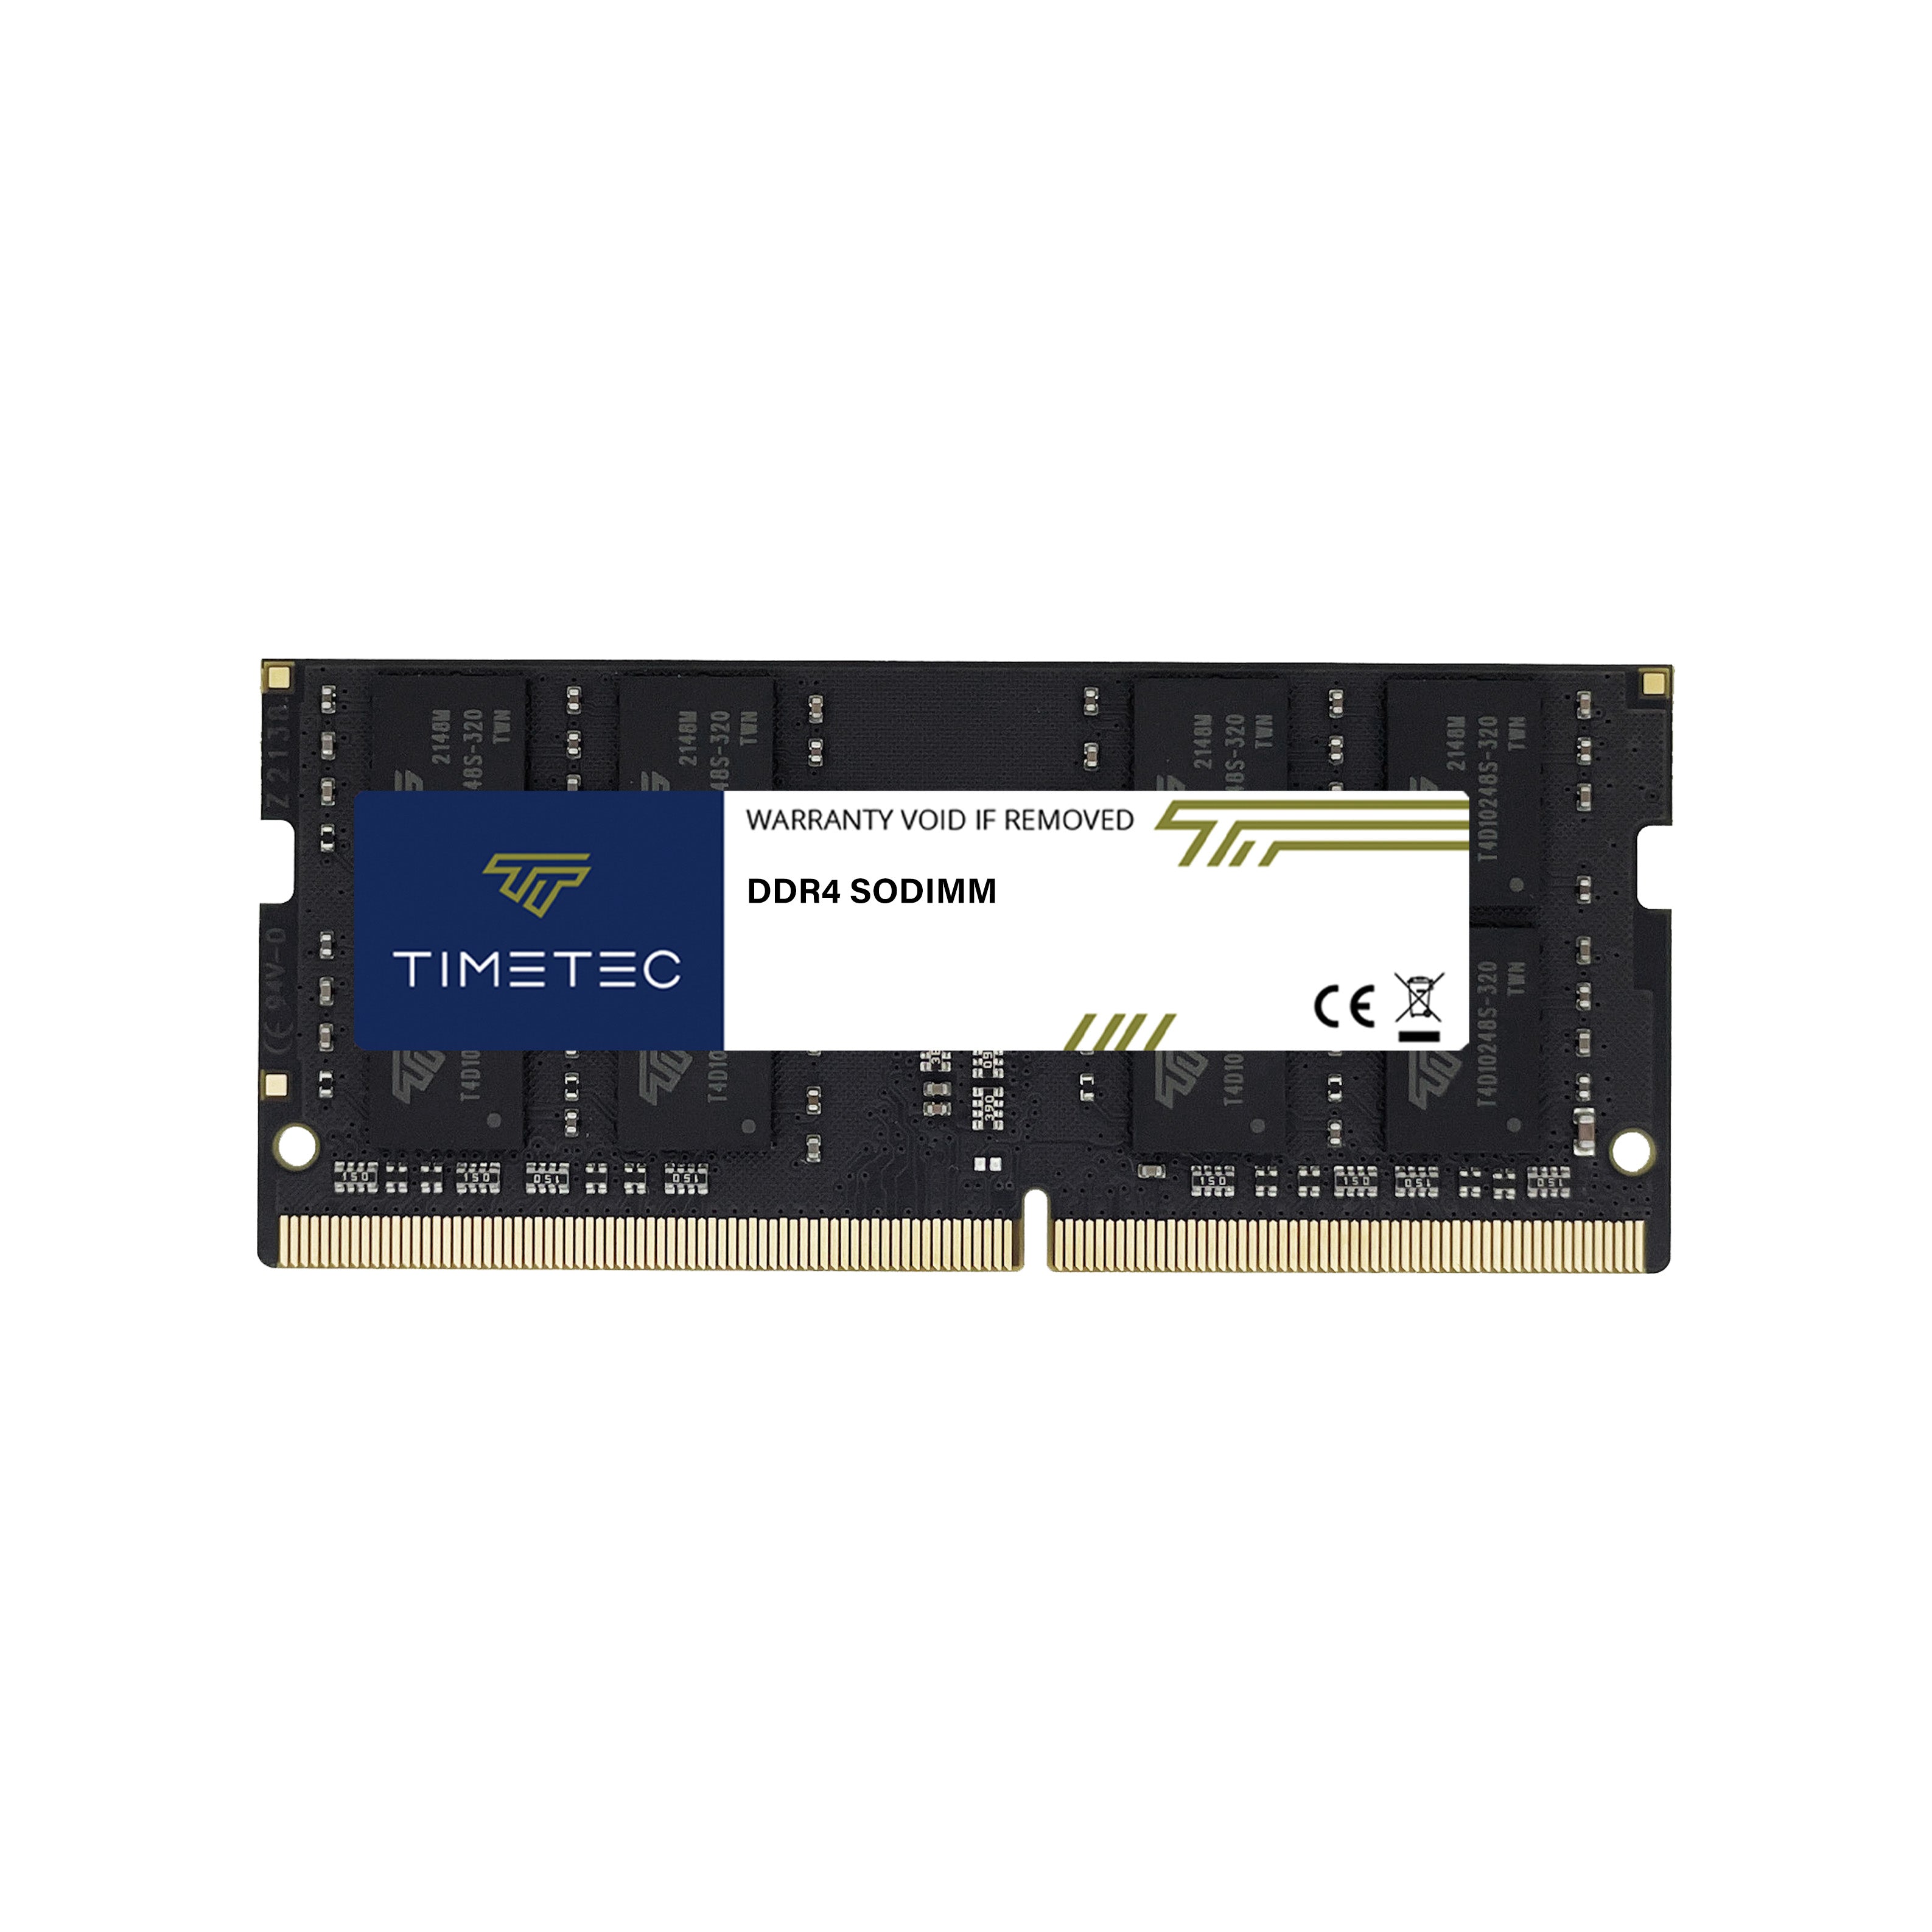 TIMETEC PREMIUM DDR4 SODIMM Laptop Memory